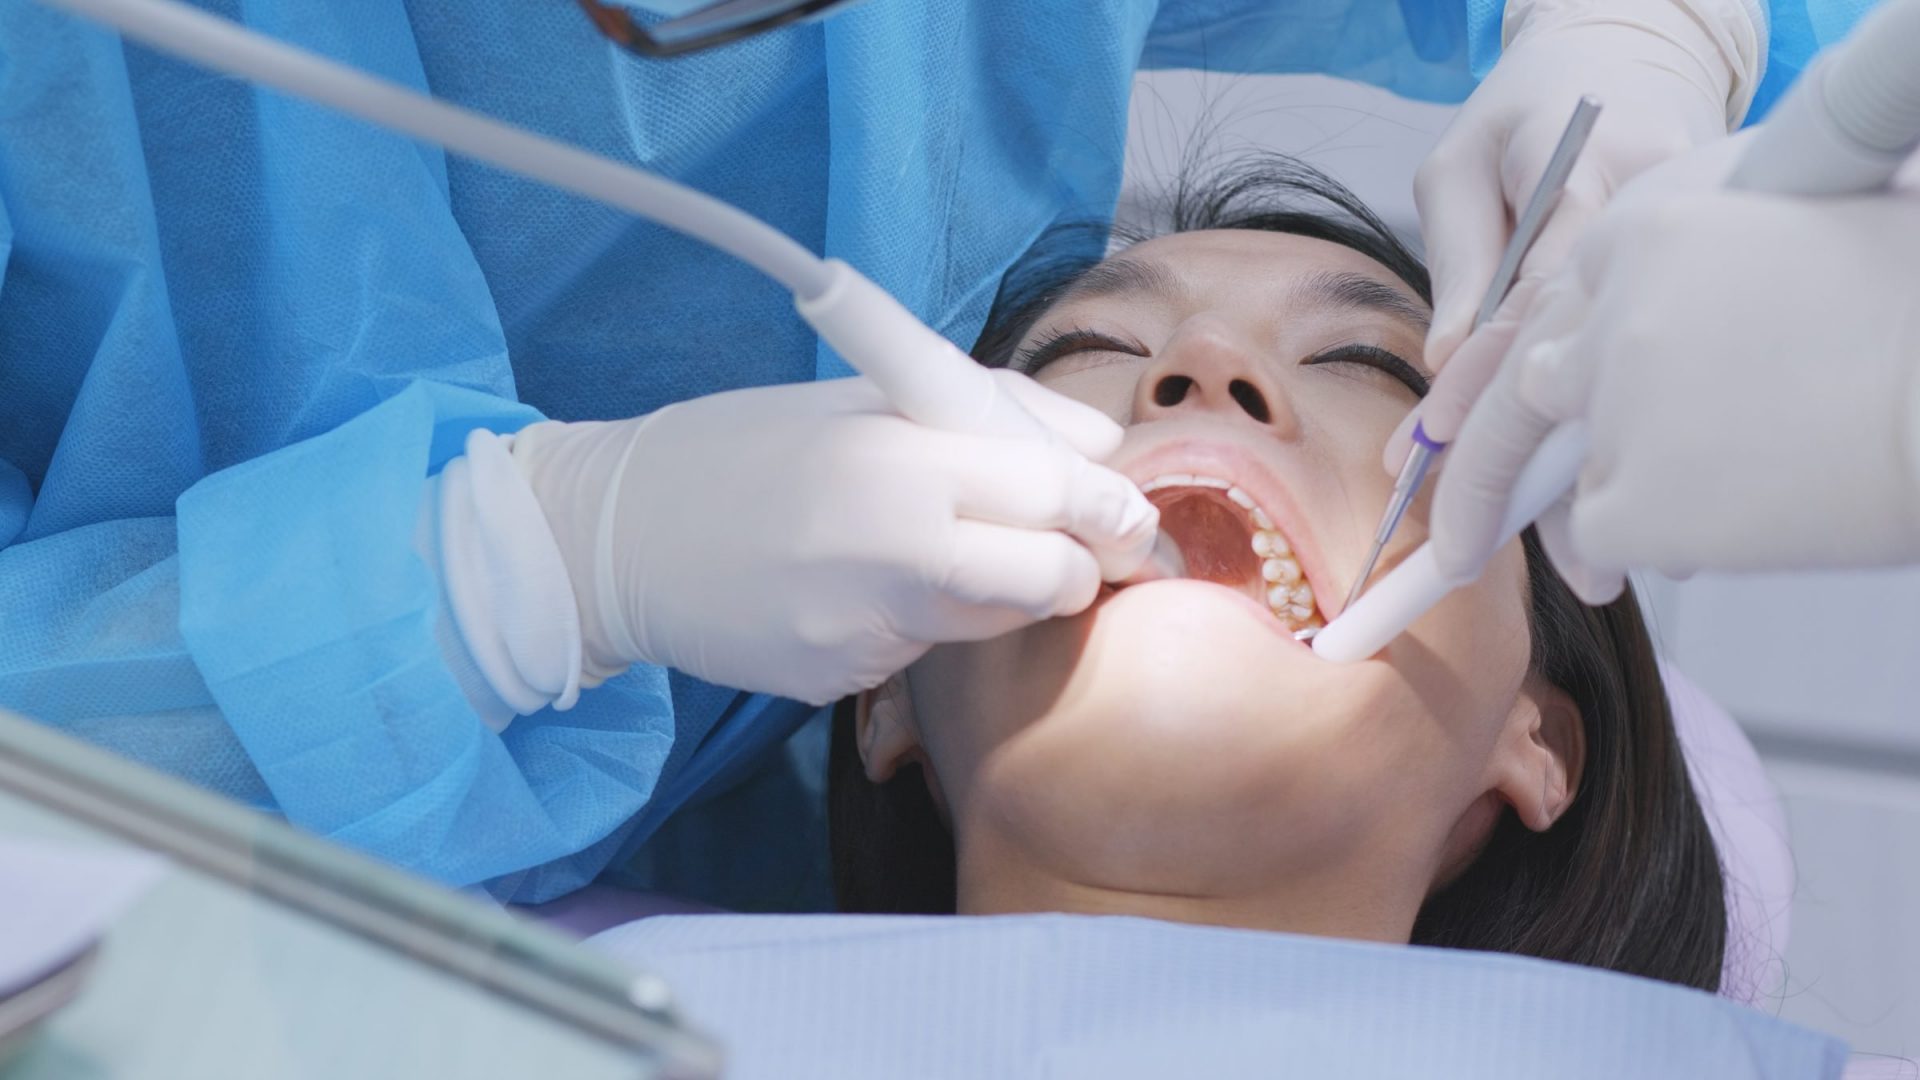 Patient undergo dental treatment in dental clinic